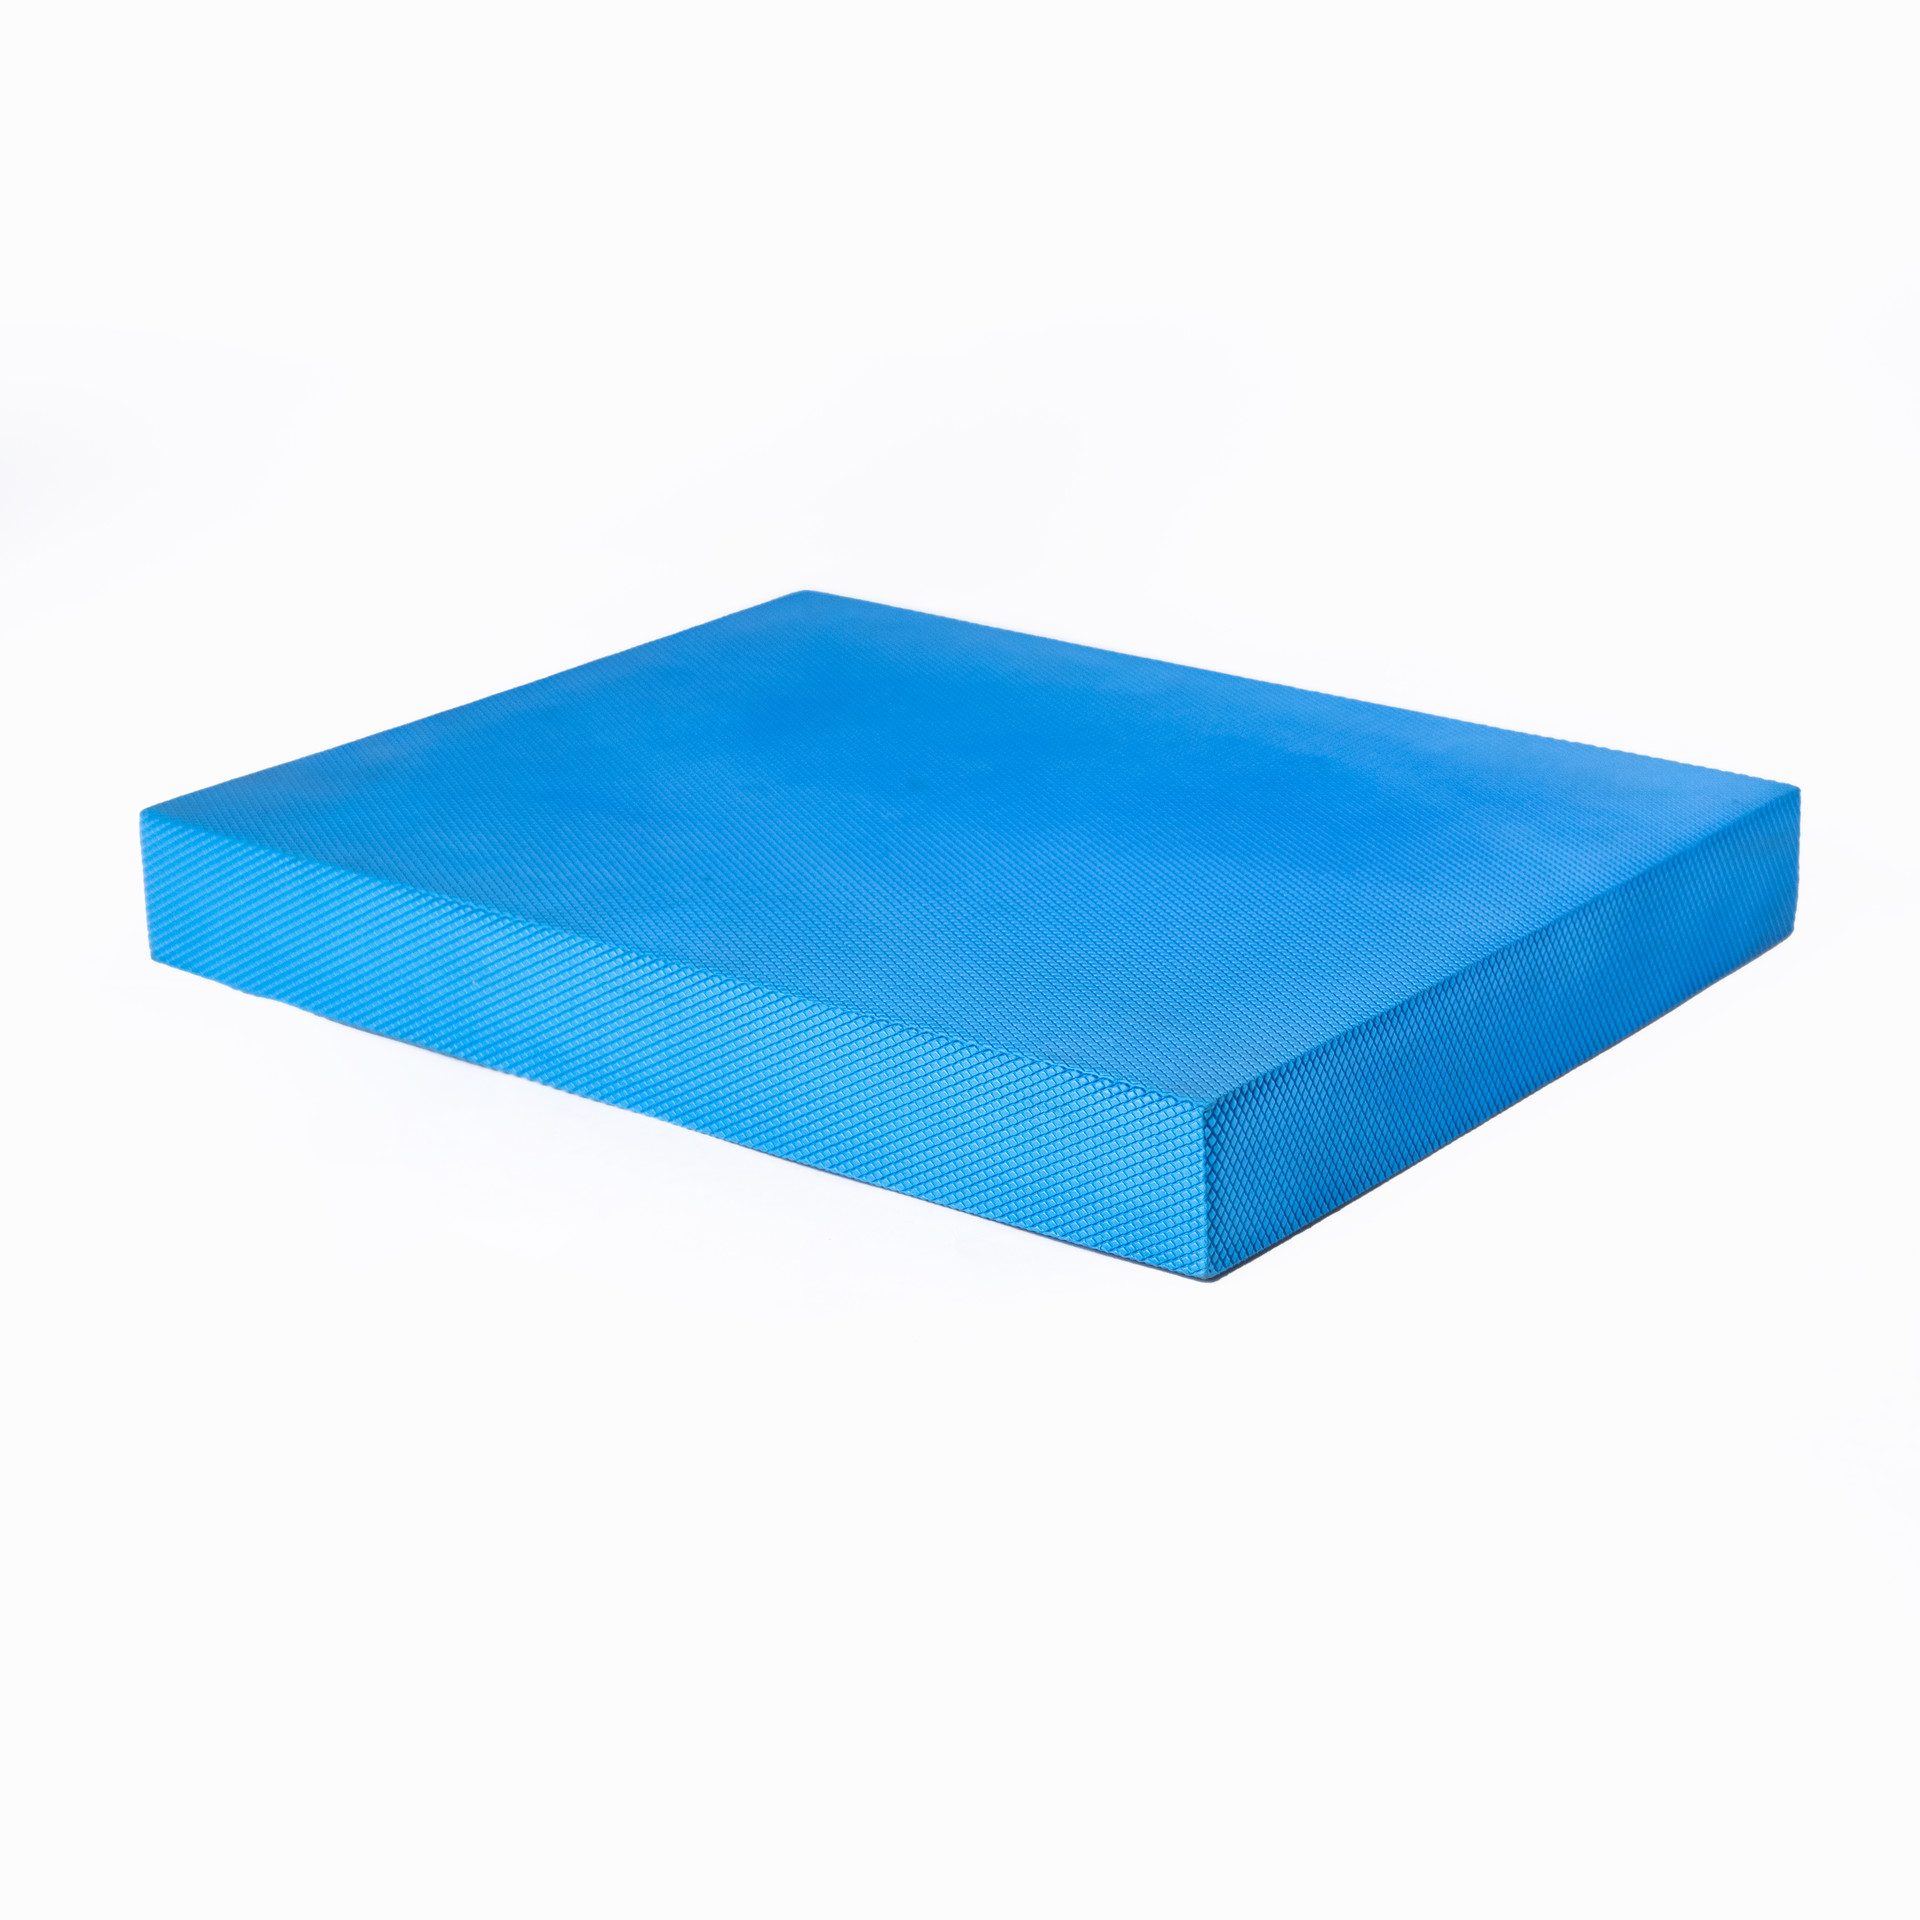 Balance Pad - Almohadilla De Equilibrio Boxpt 460g - azul - 